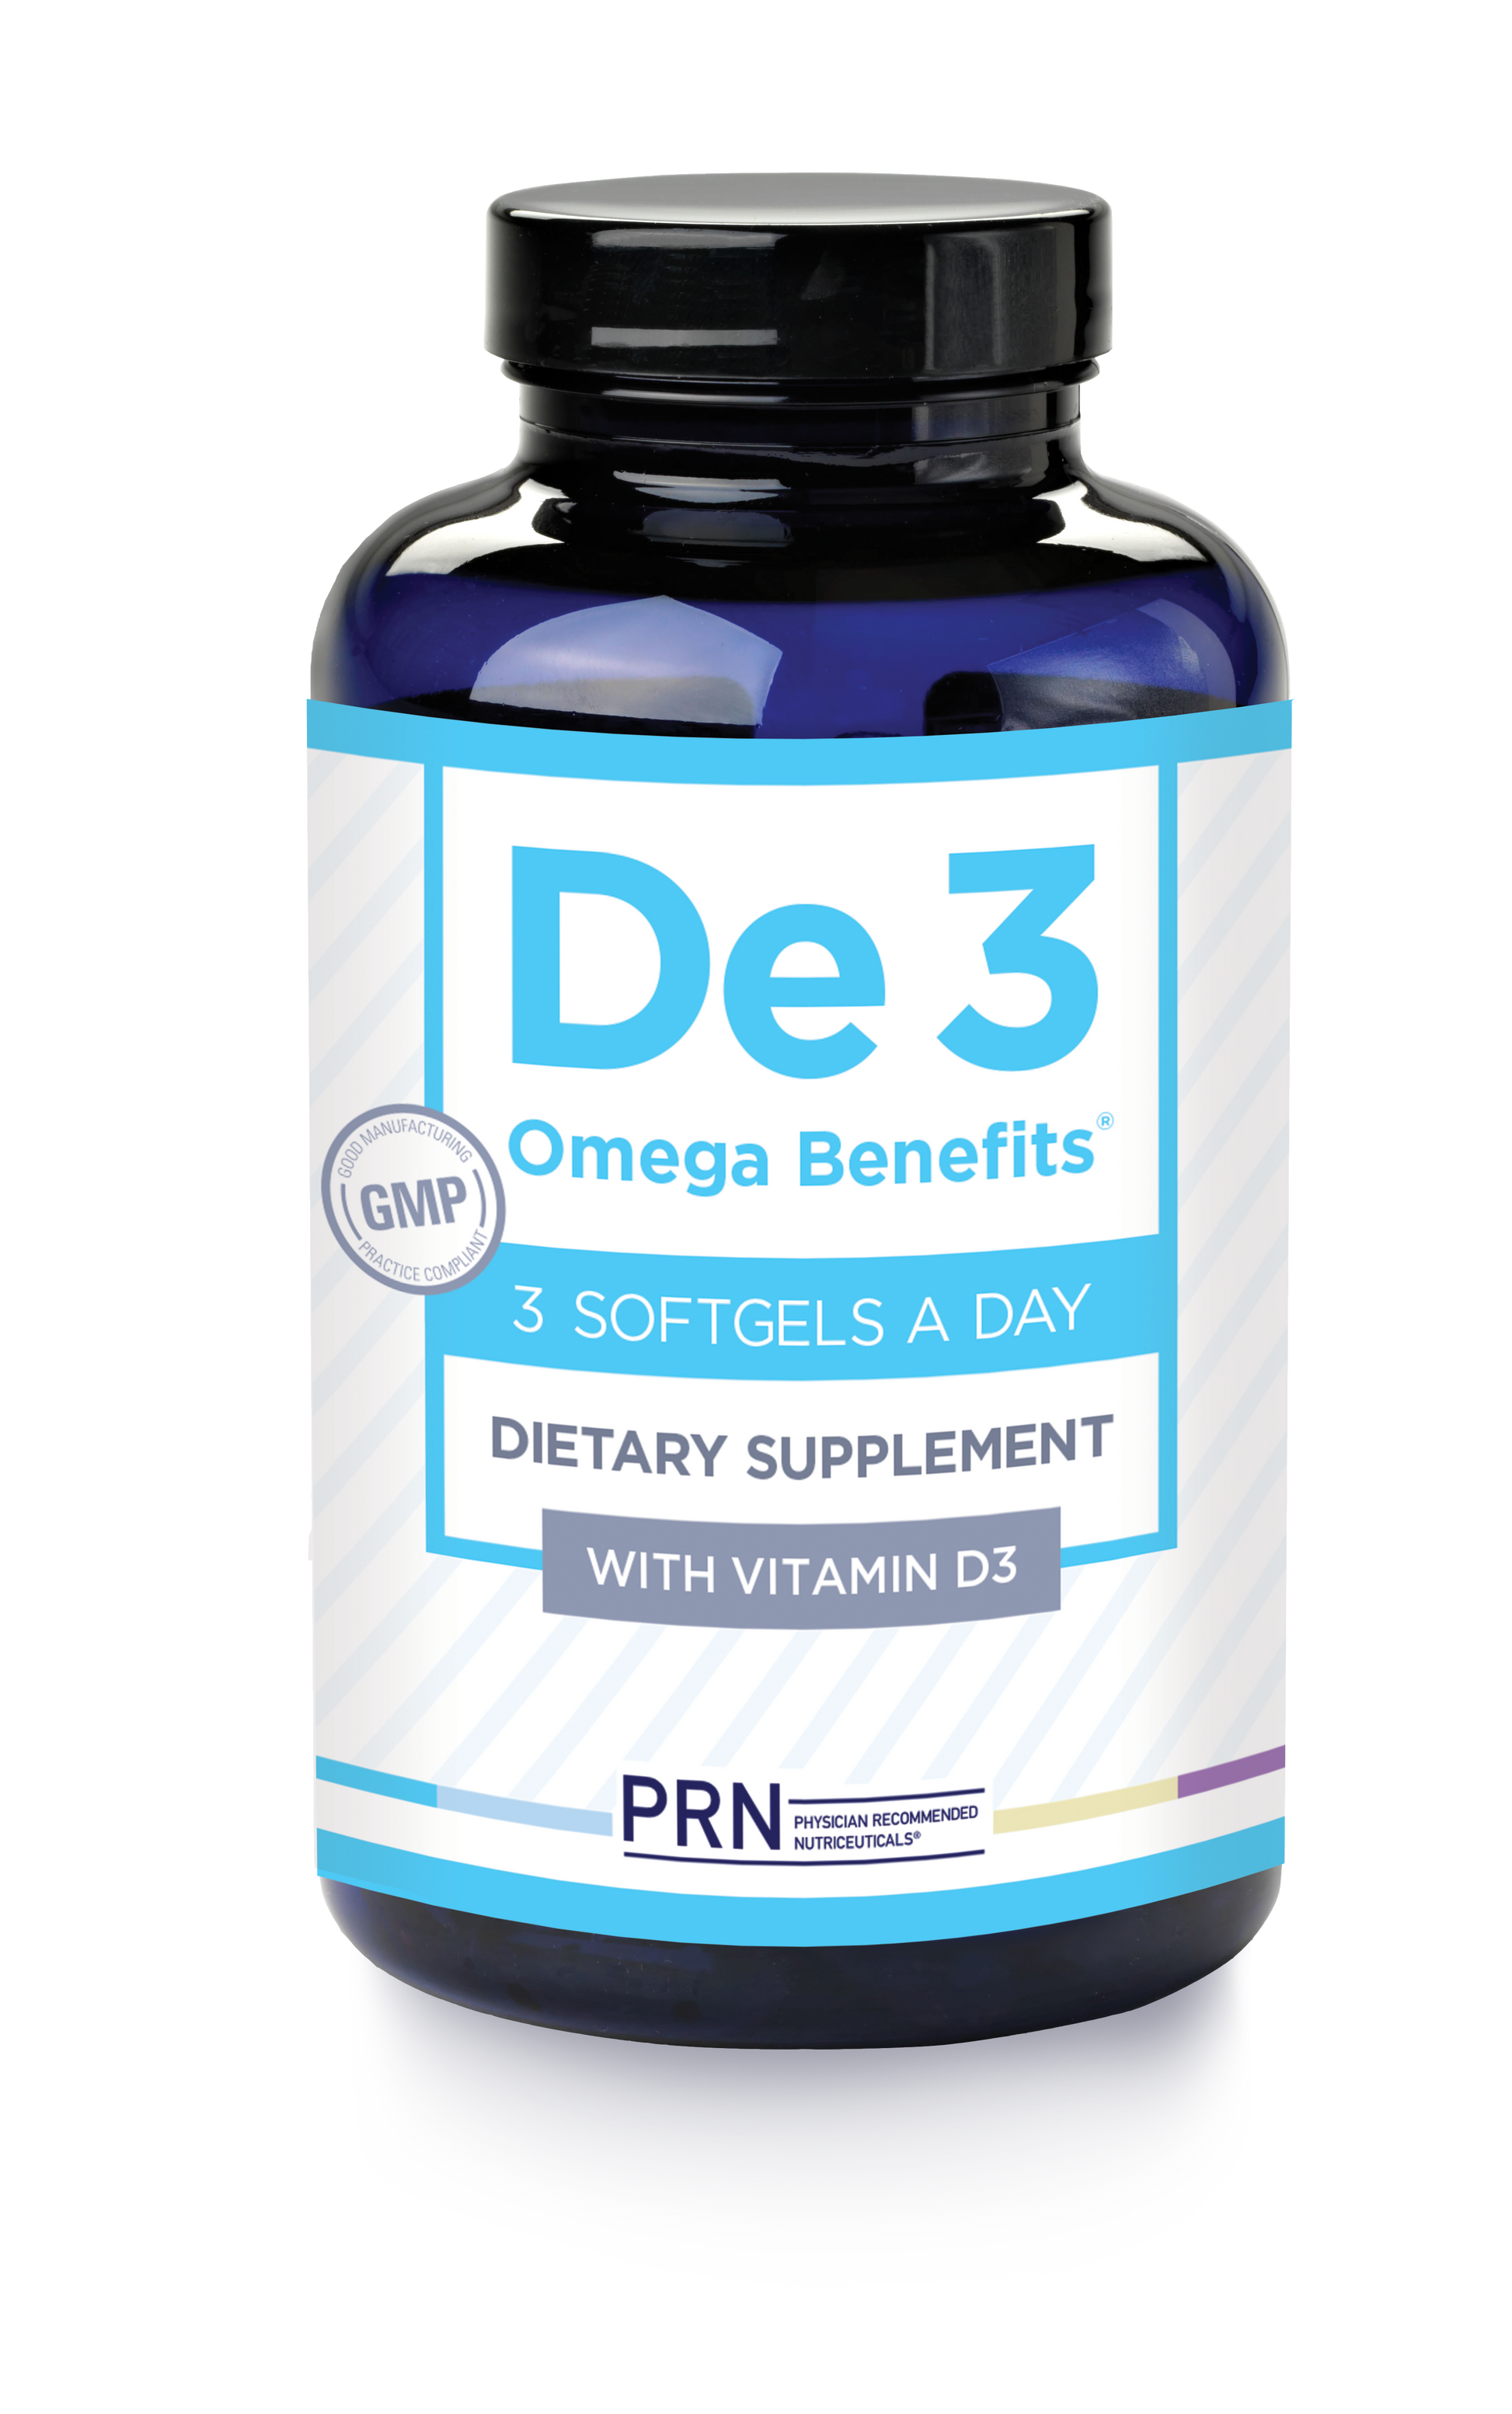 De 3 Omega Benefits Dietary Supplement bottle